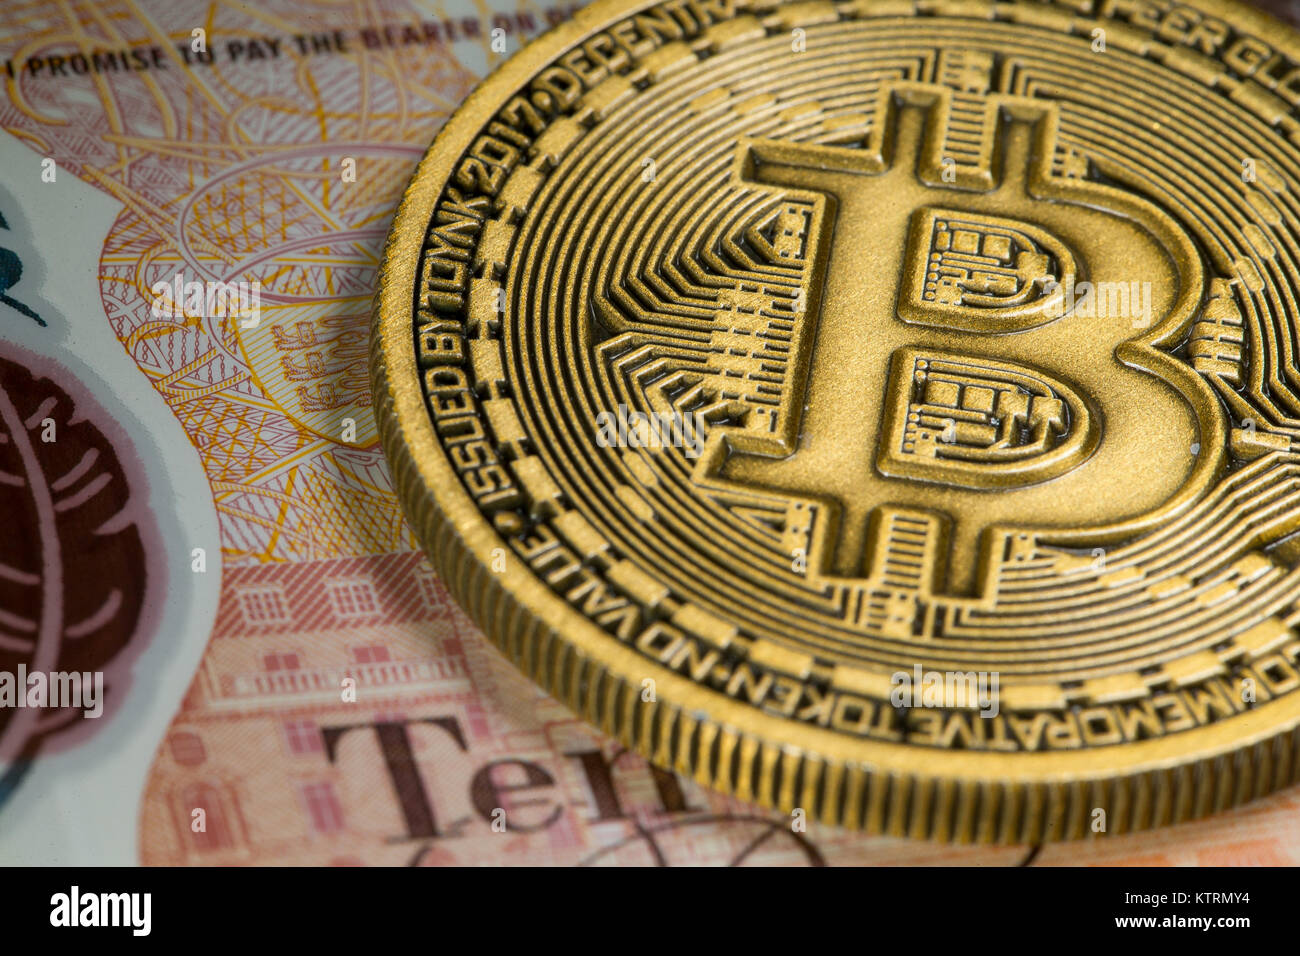 Gold Bitcoin coin on a tenner ten pound note Stock Photo